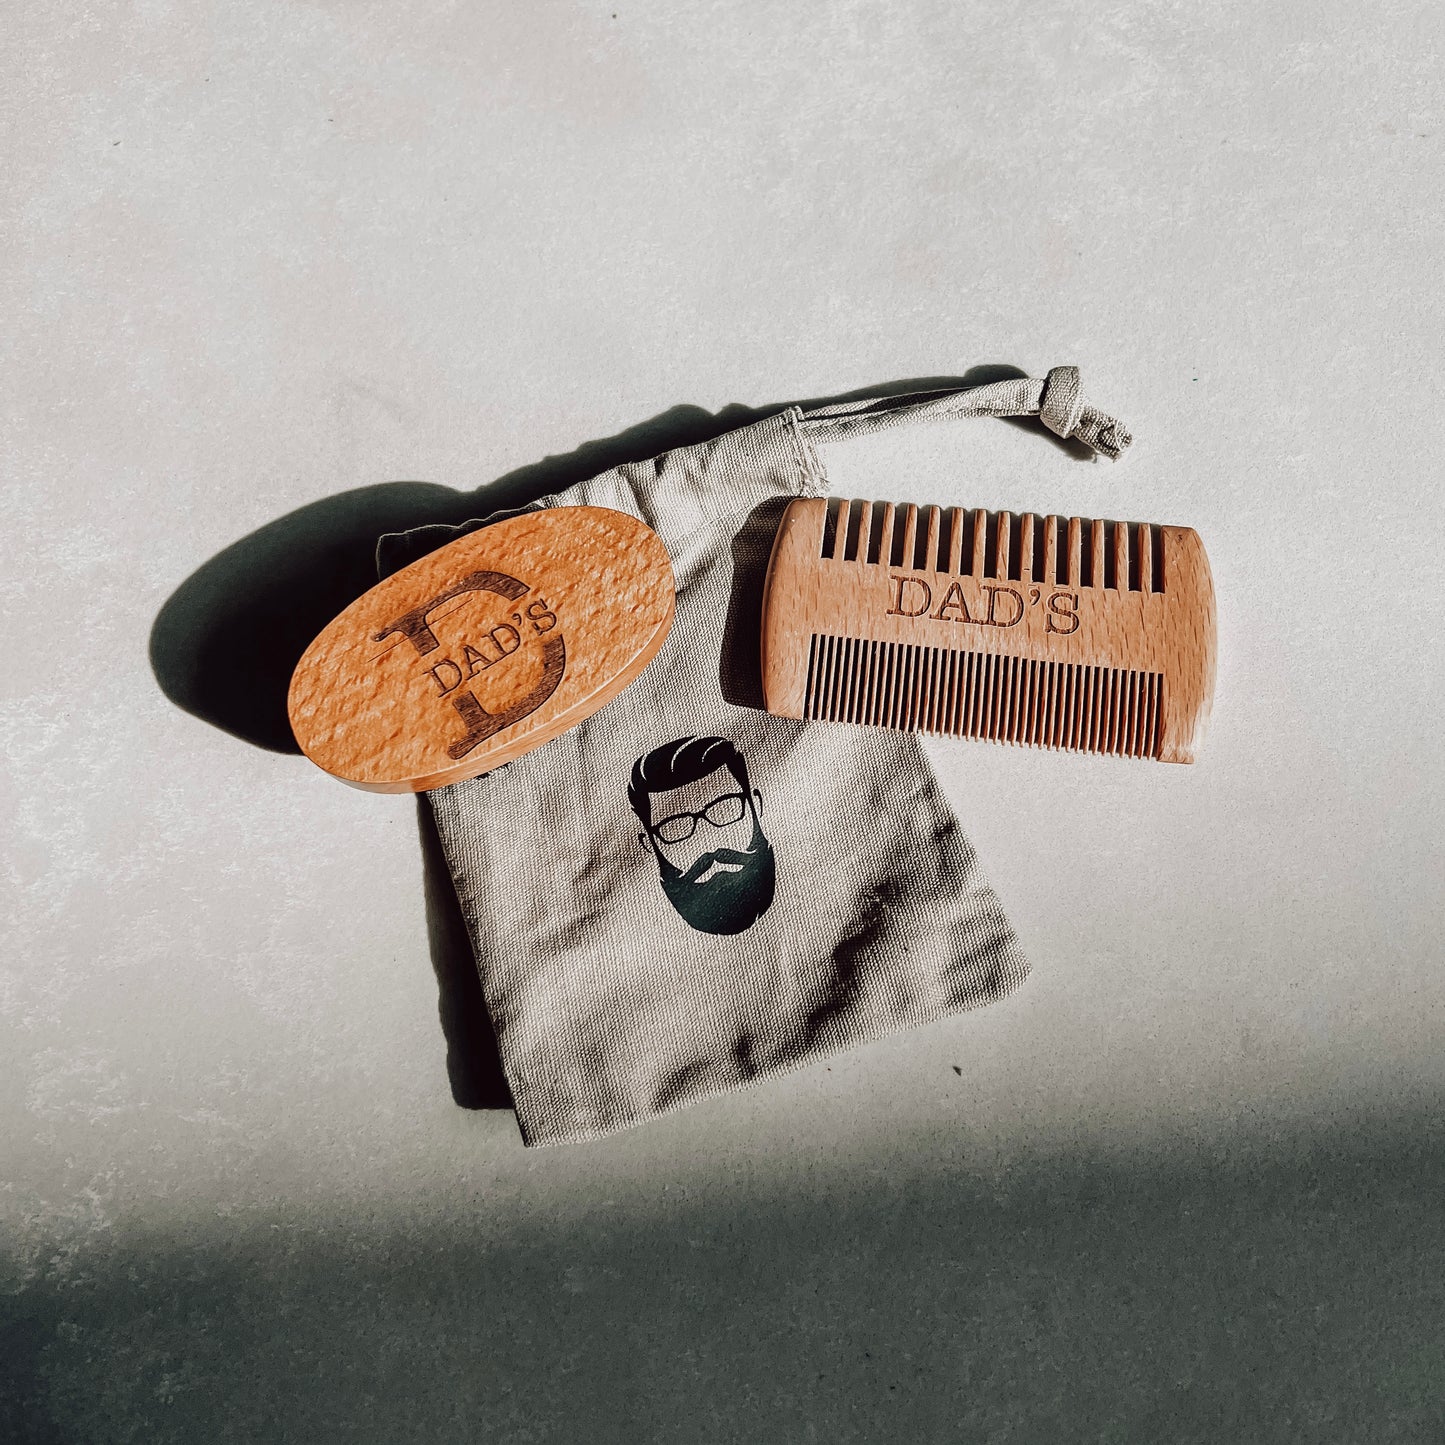 The Beard Grooming Kit